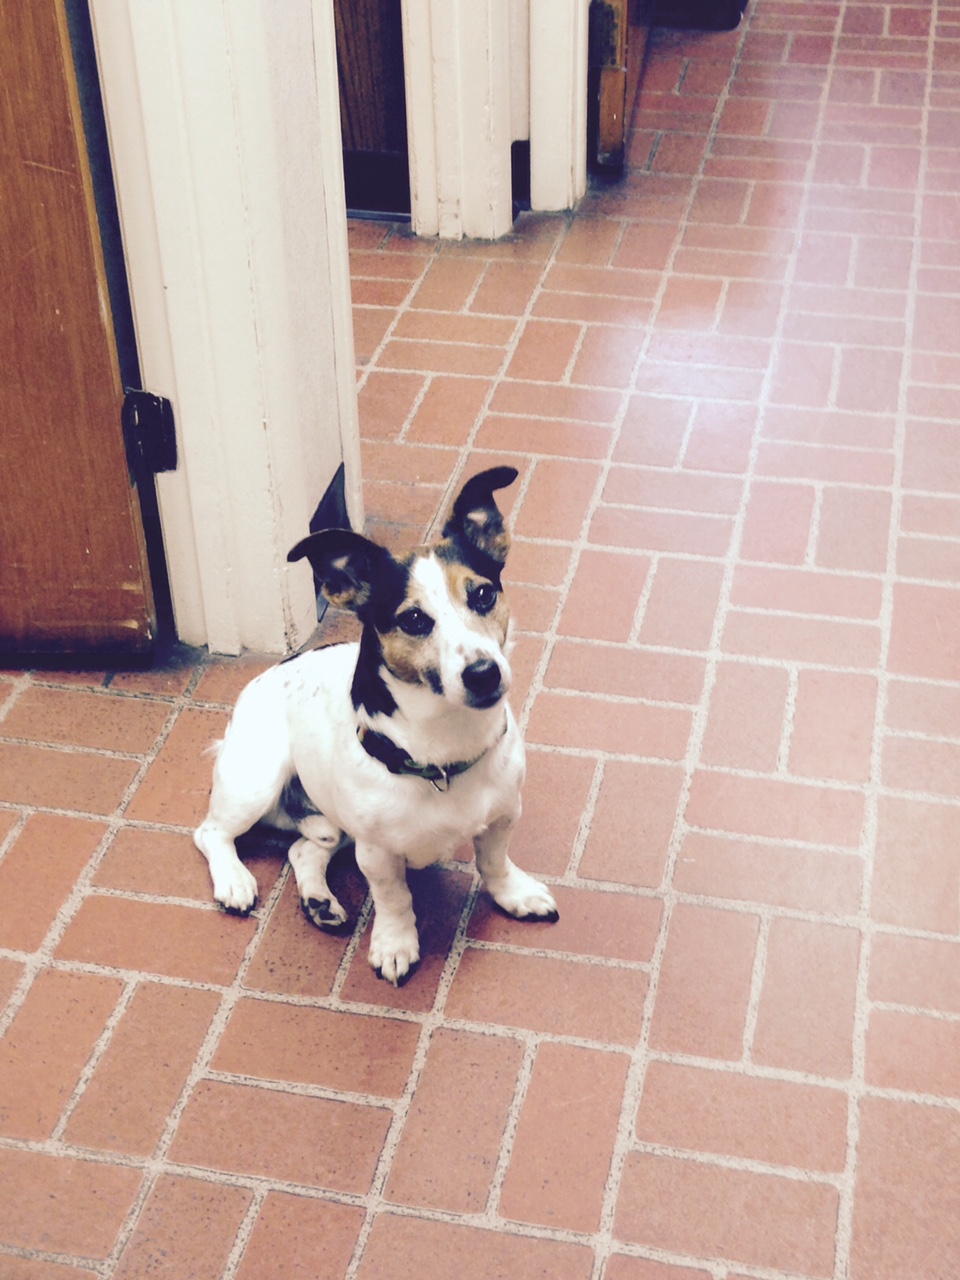 About Seven Locks Animal Hospital - Dog sitting on floor